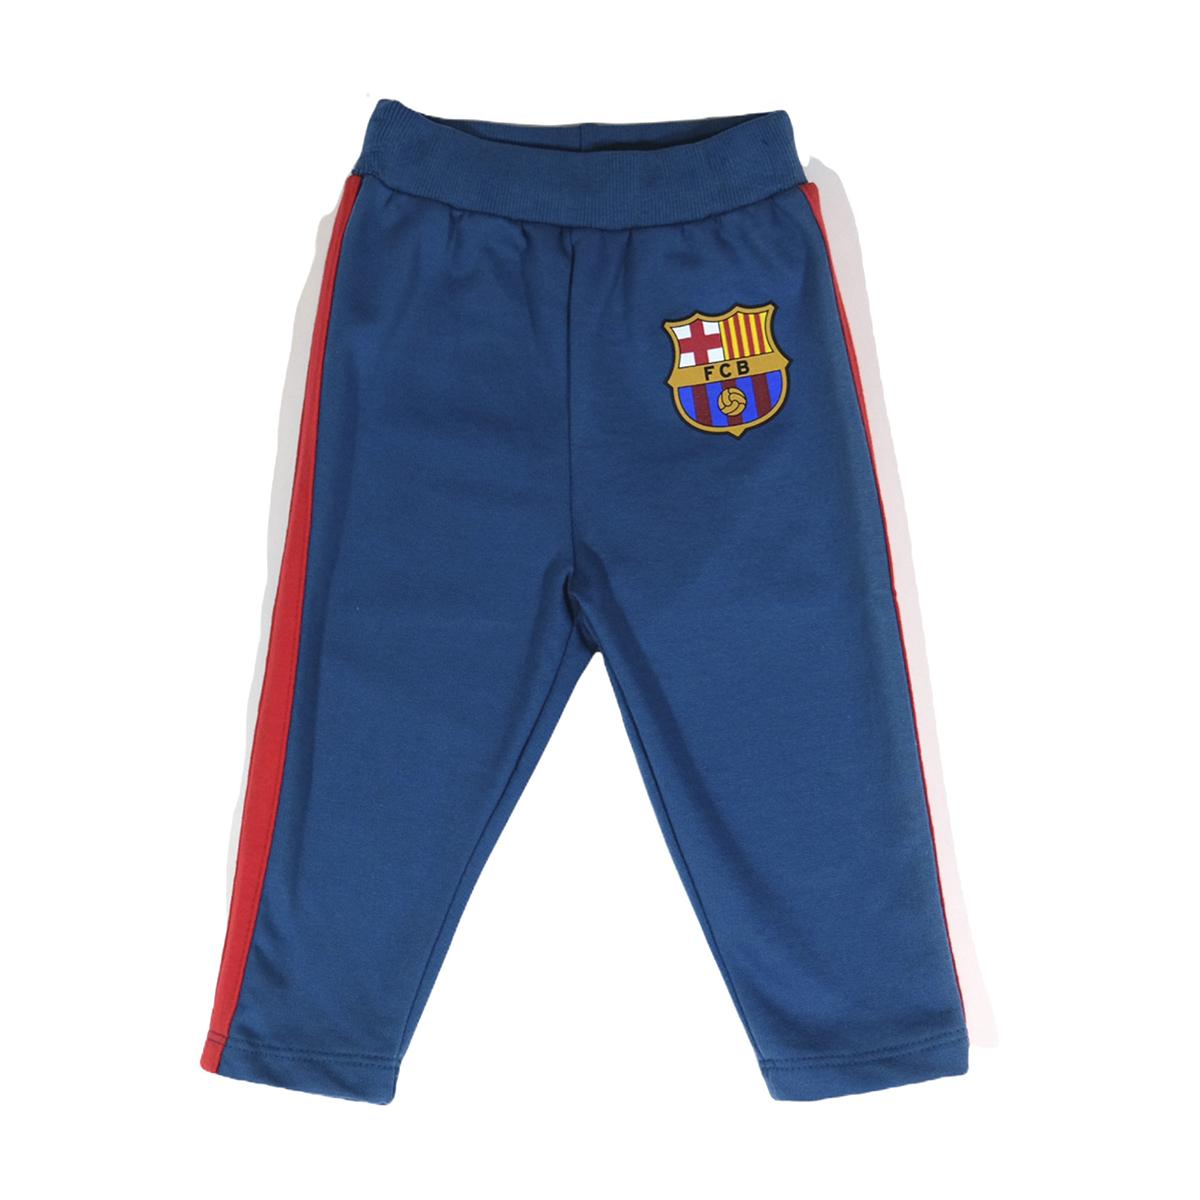 Kit Pants Bebé Niño Barcelona Original